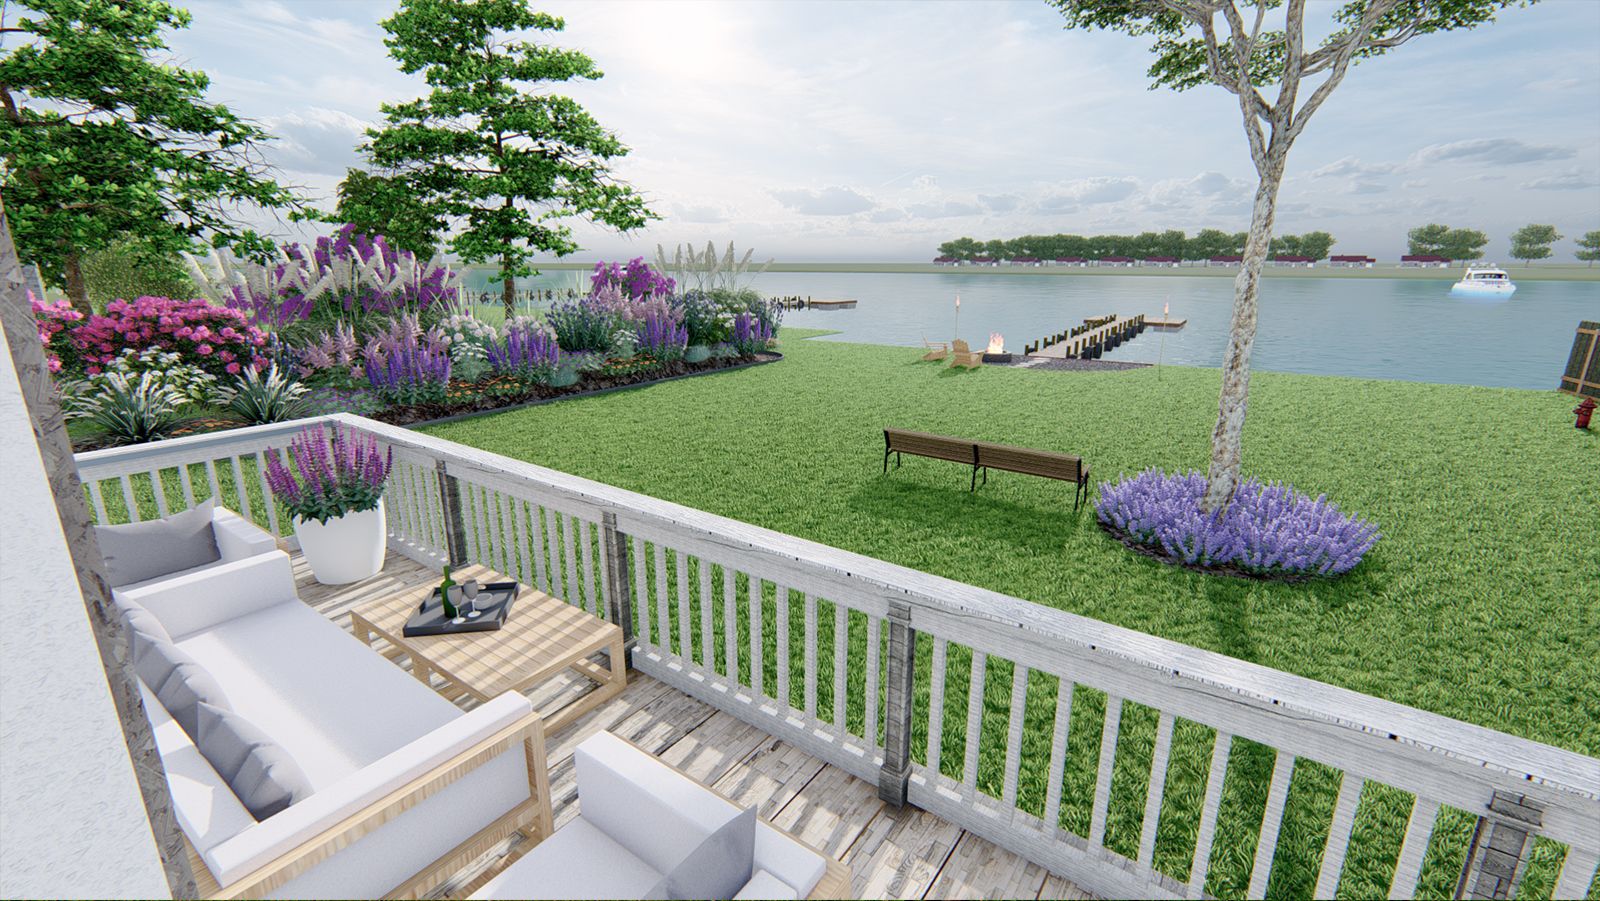 backyard landscape design ideas for a house on a lake 